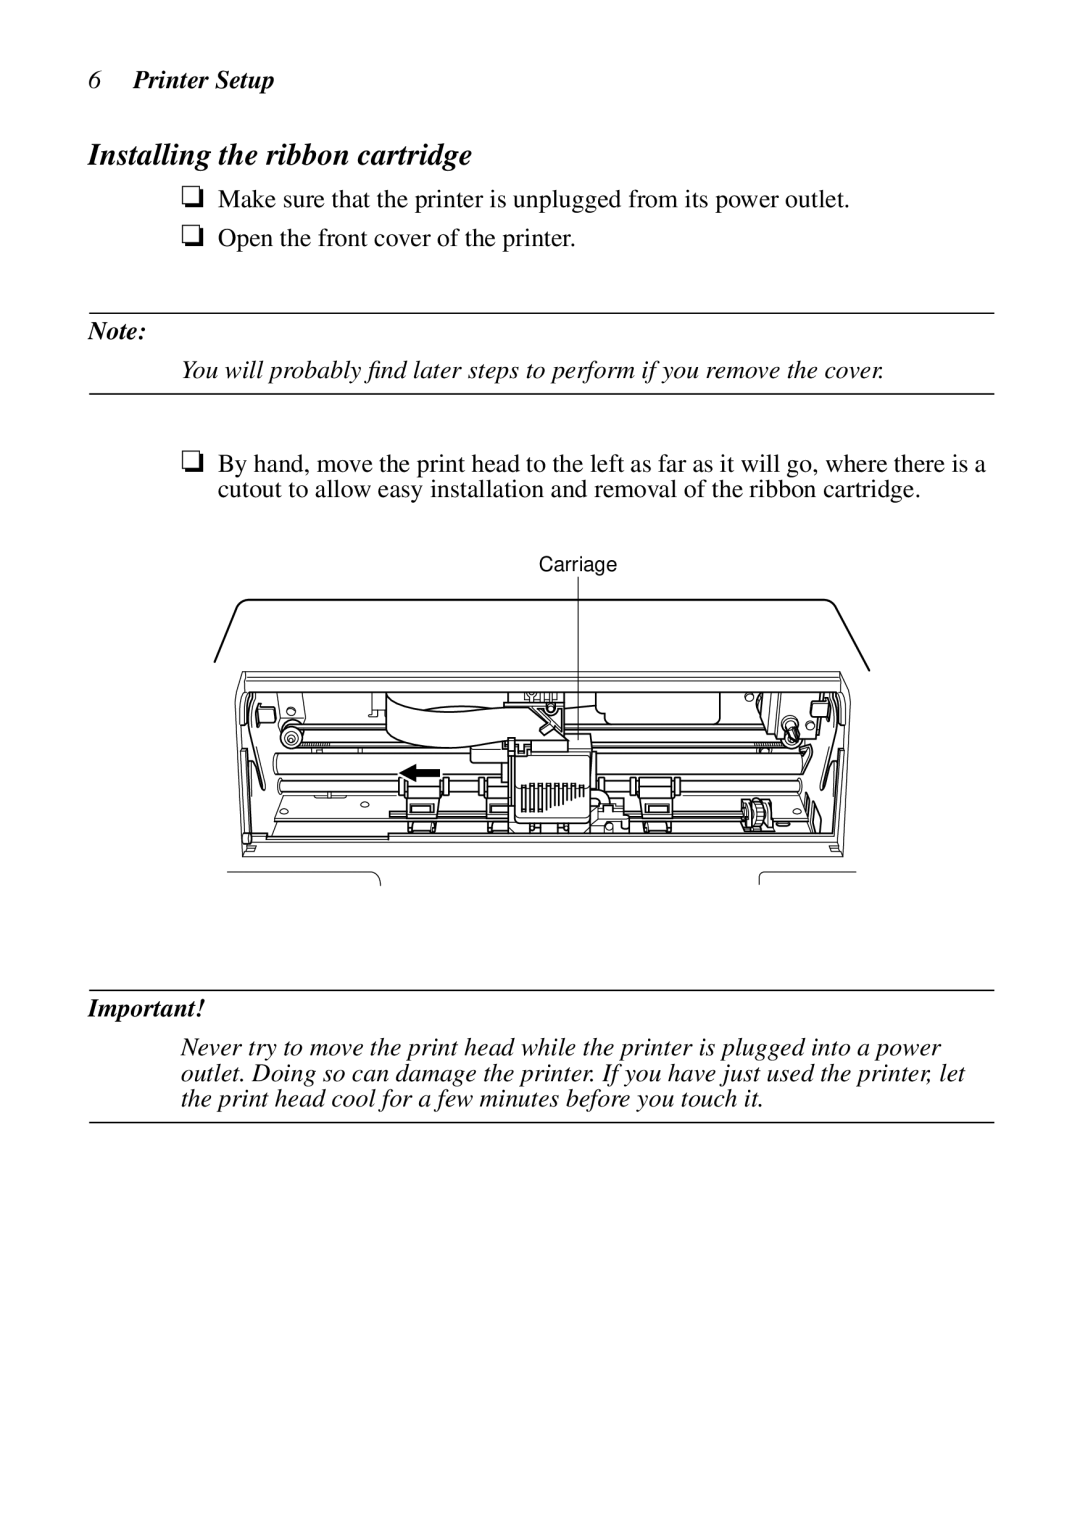 Star Micronics LC-8021 manual Installing the ribbon cartridge, Printer Setup 